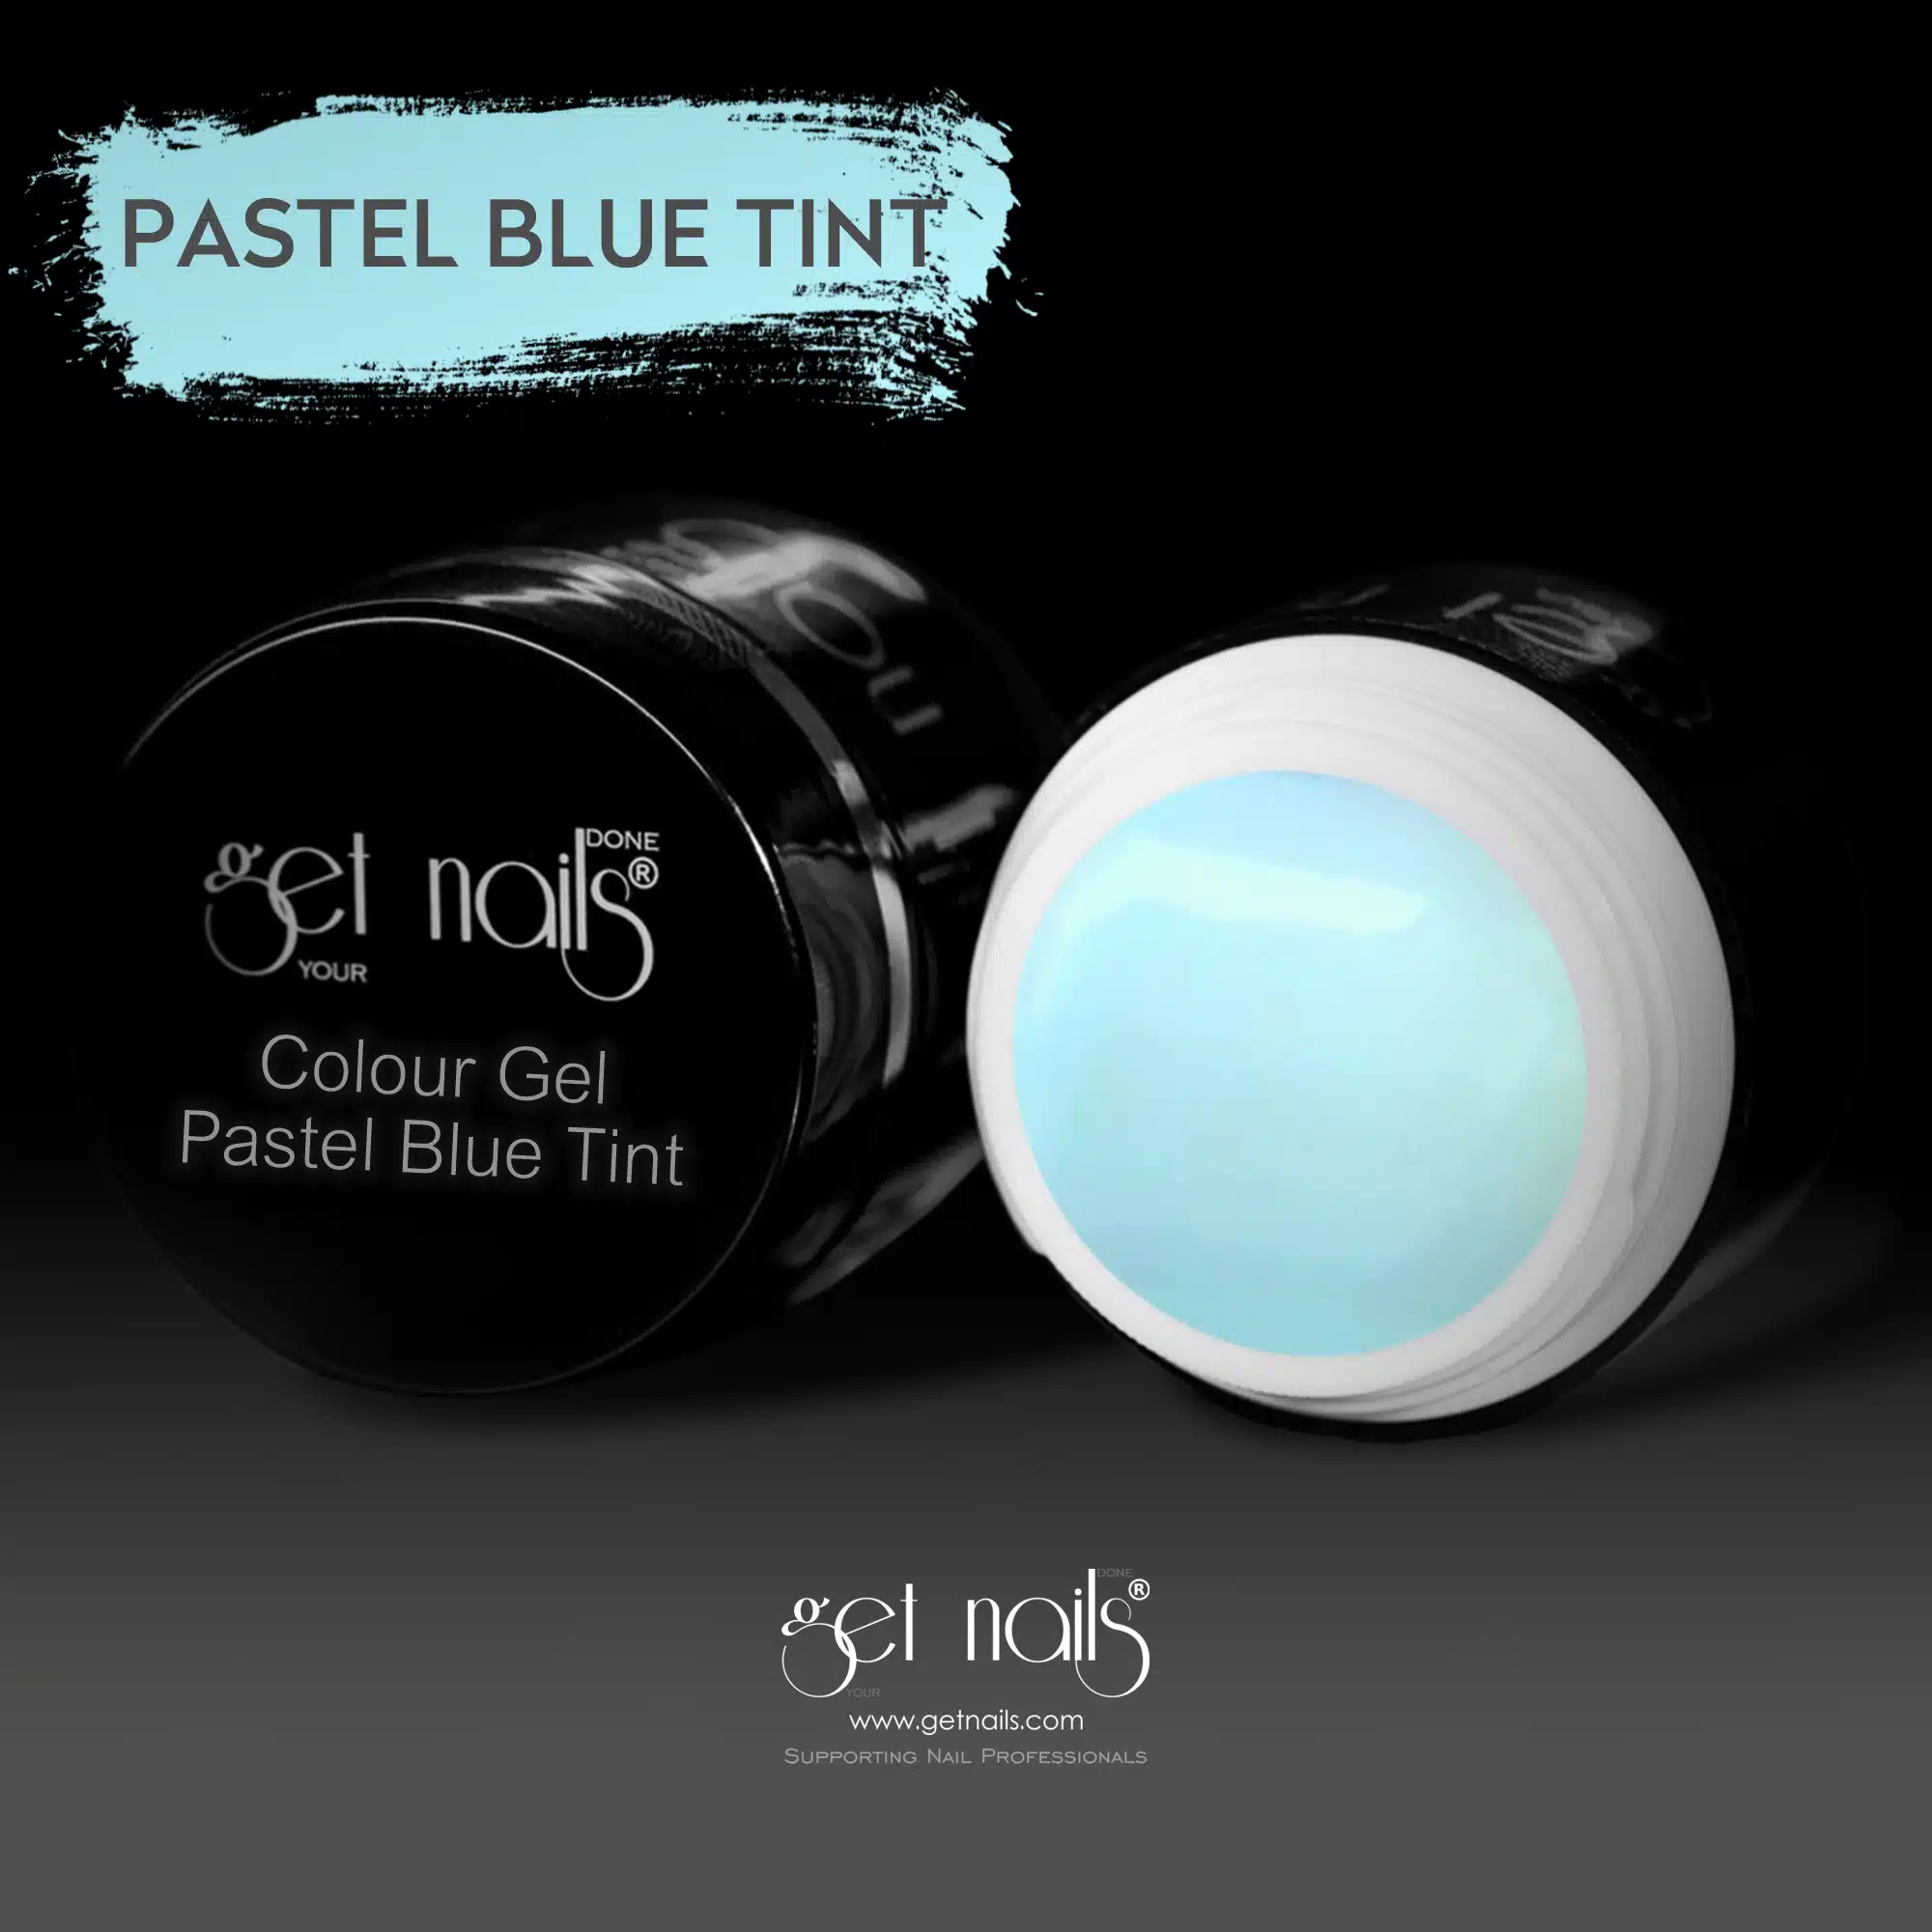 Get Nails Austria - Цветной гель Pastel Blue Tint 5g